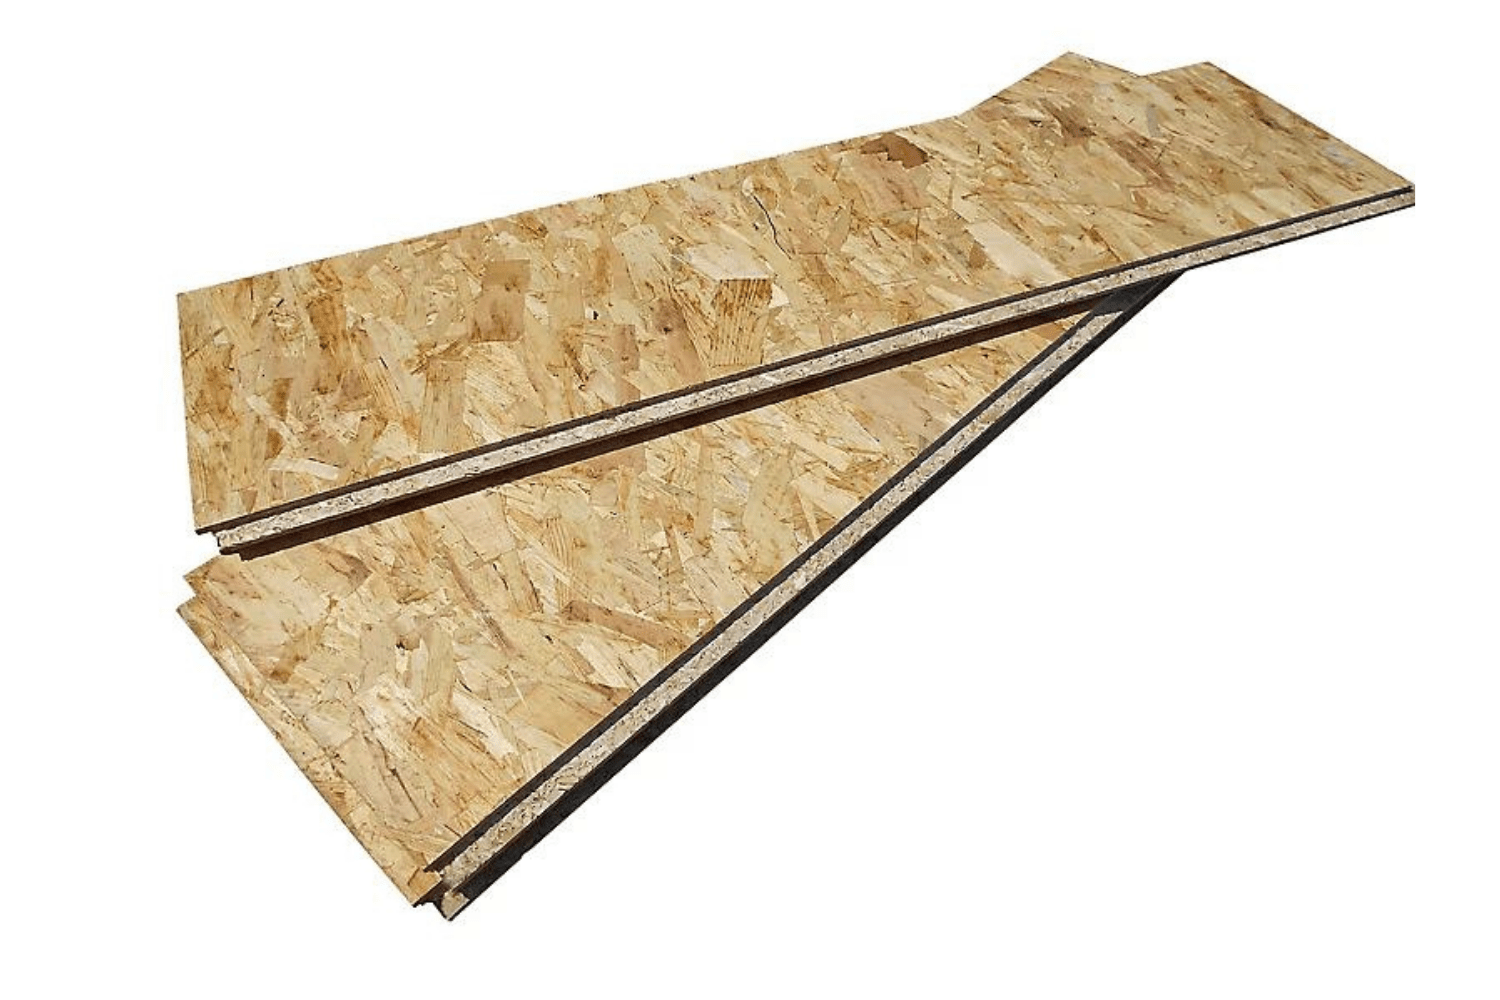 InsulationUK.co.uk OSB Loft Boards - 1220 x 320 x 18mm (Pack of 4) OSB Loft Boards - 1220 x 320 x 18mm (Pack of 4) | insulationuk.co.uk